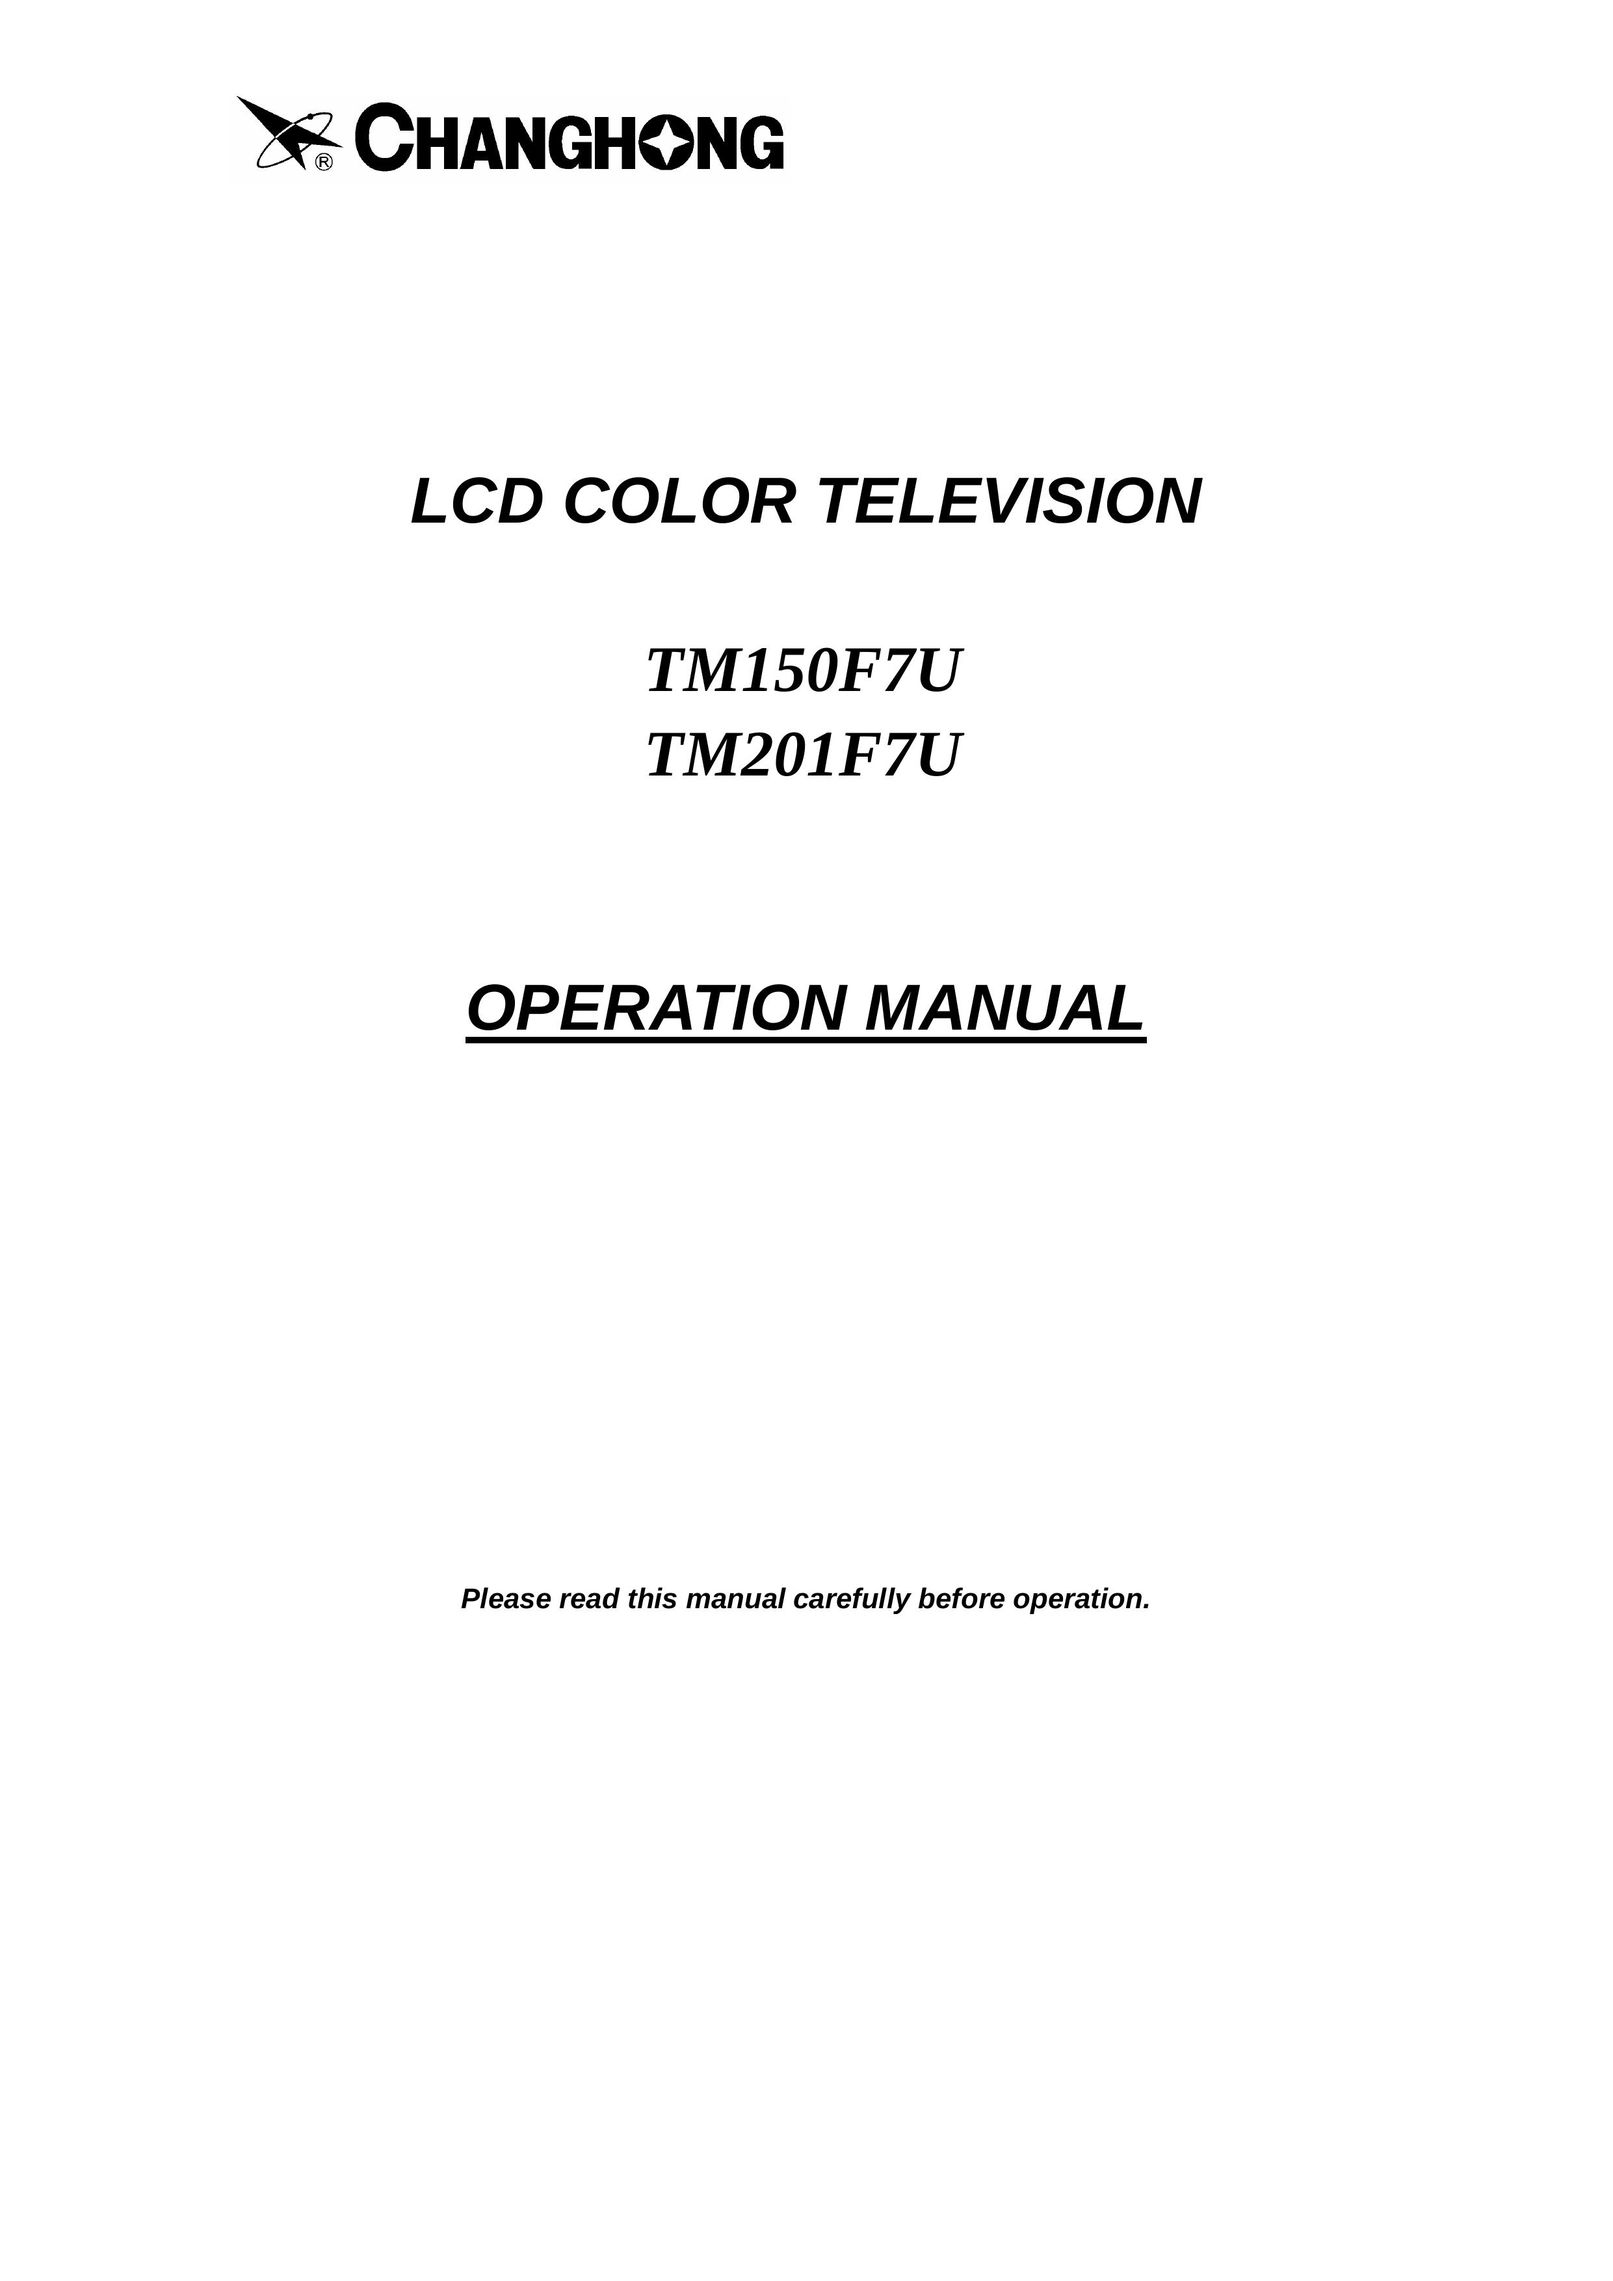 Changhong Electric TM150F7U, TM201F7U Flat Panel Television User Manual